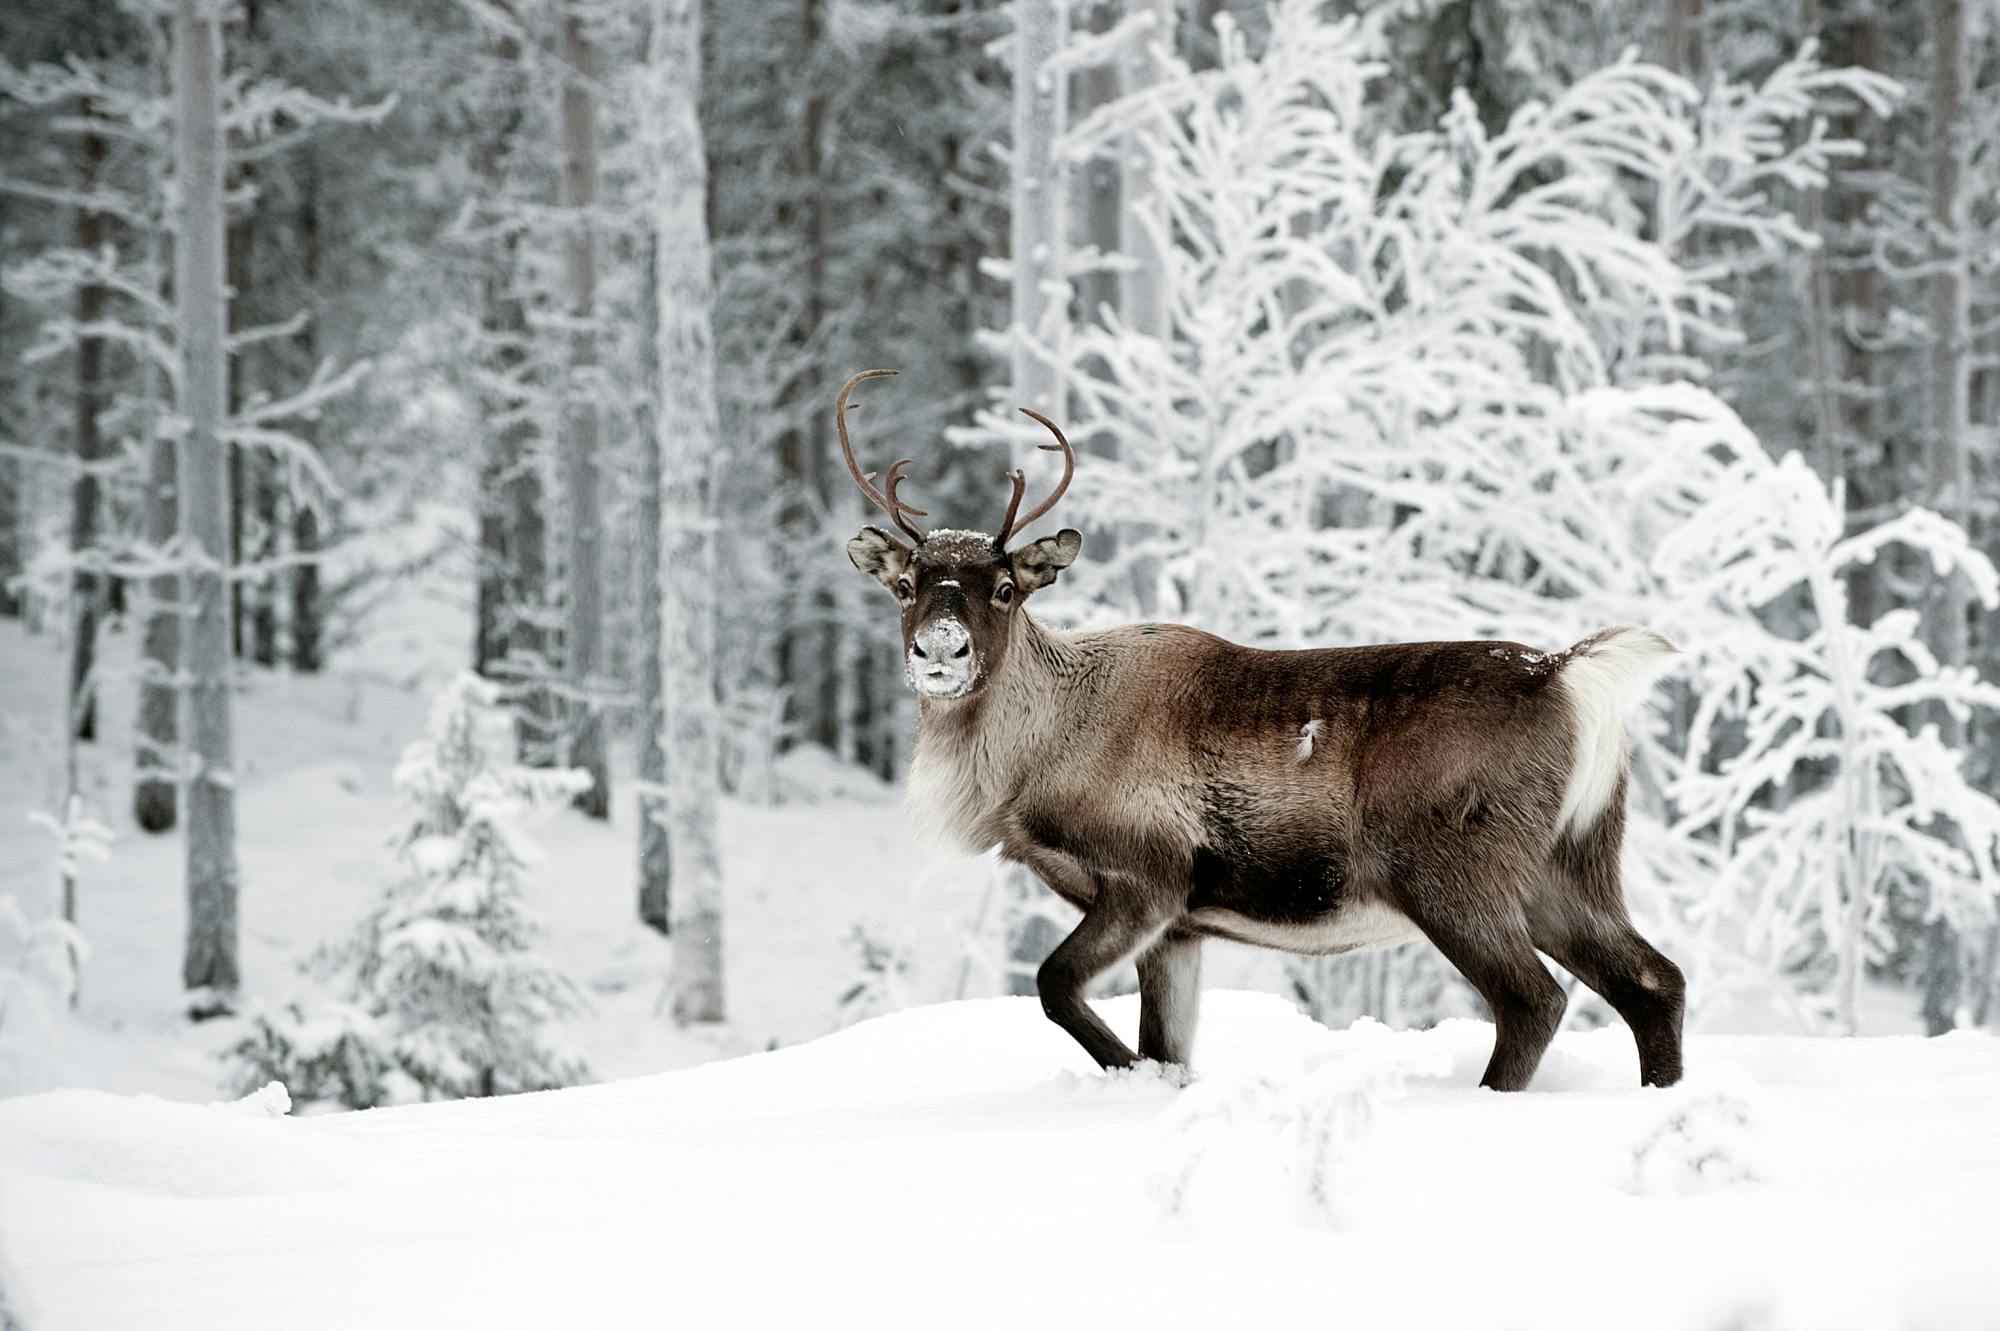 Meet Reindeers in Rovaniemi